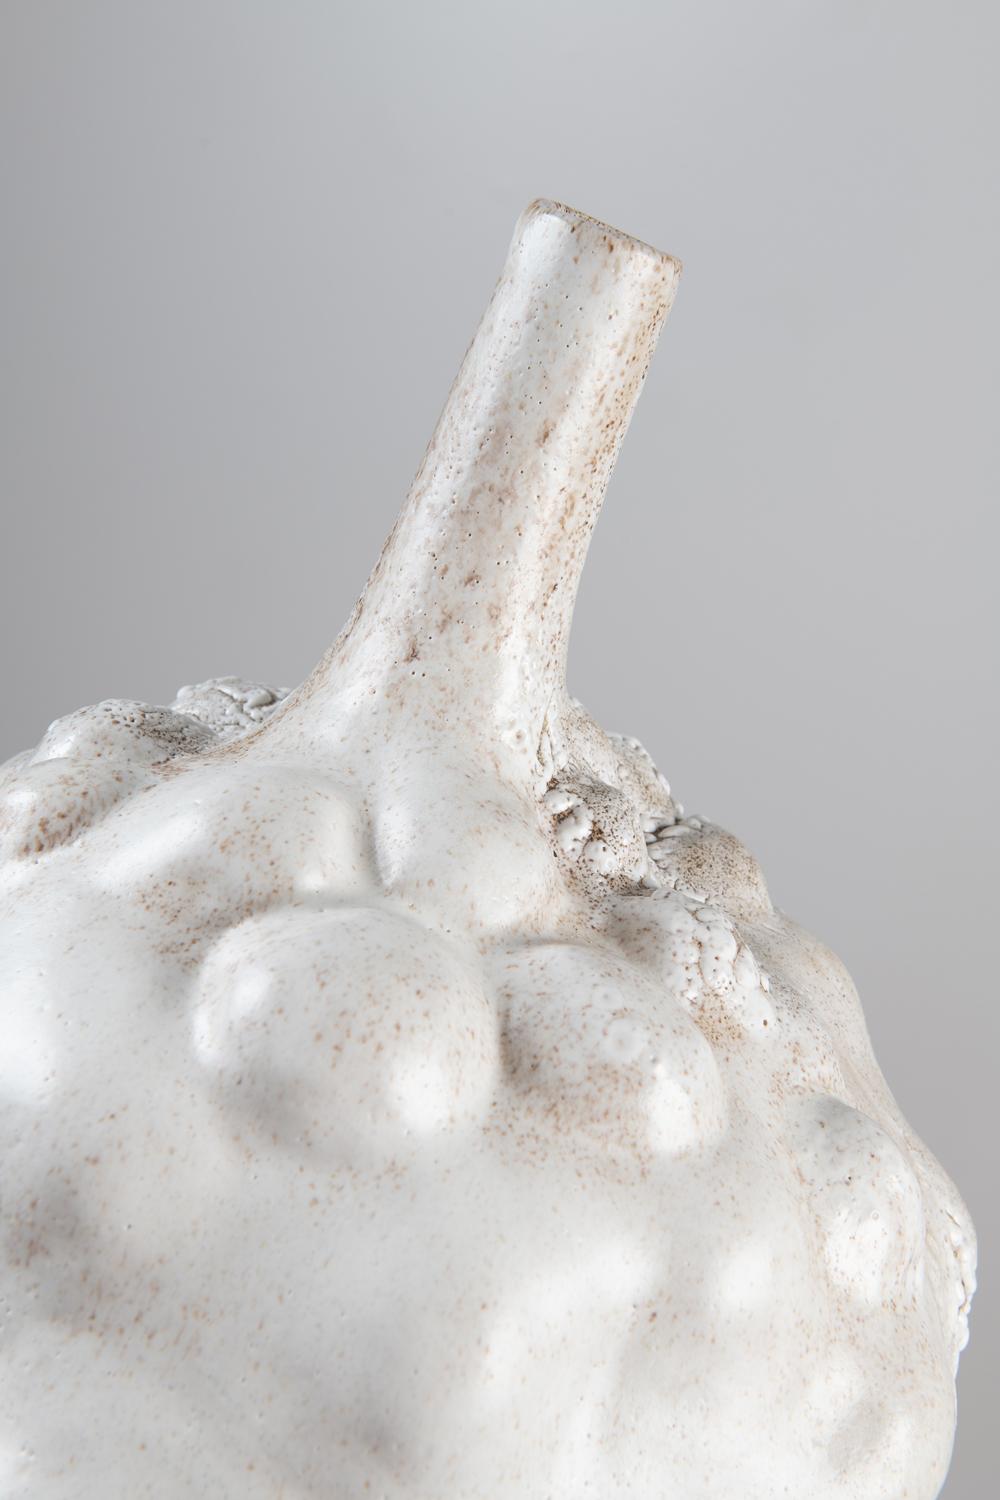 Spora Vessel in Glazed Stoneware by Trish DeMasi For Sale 1